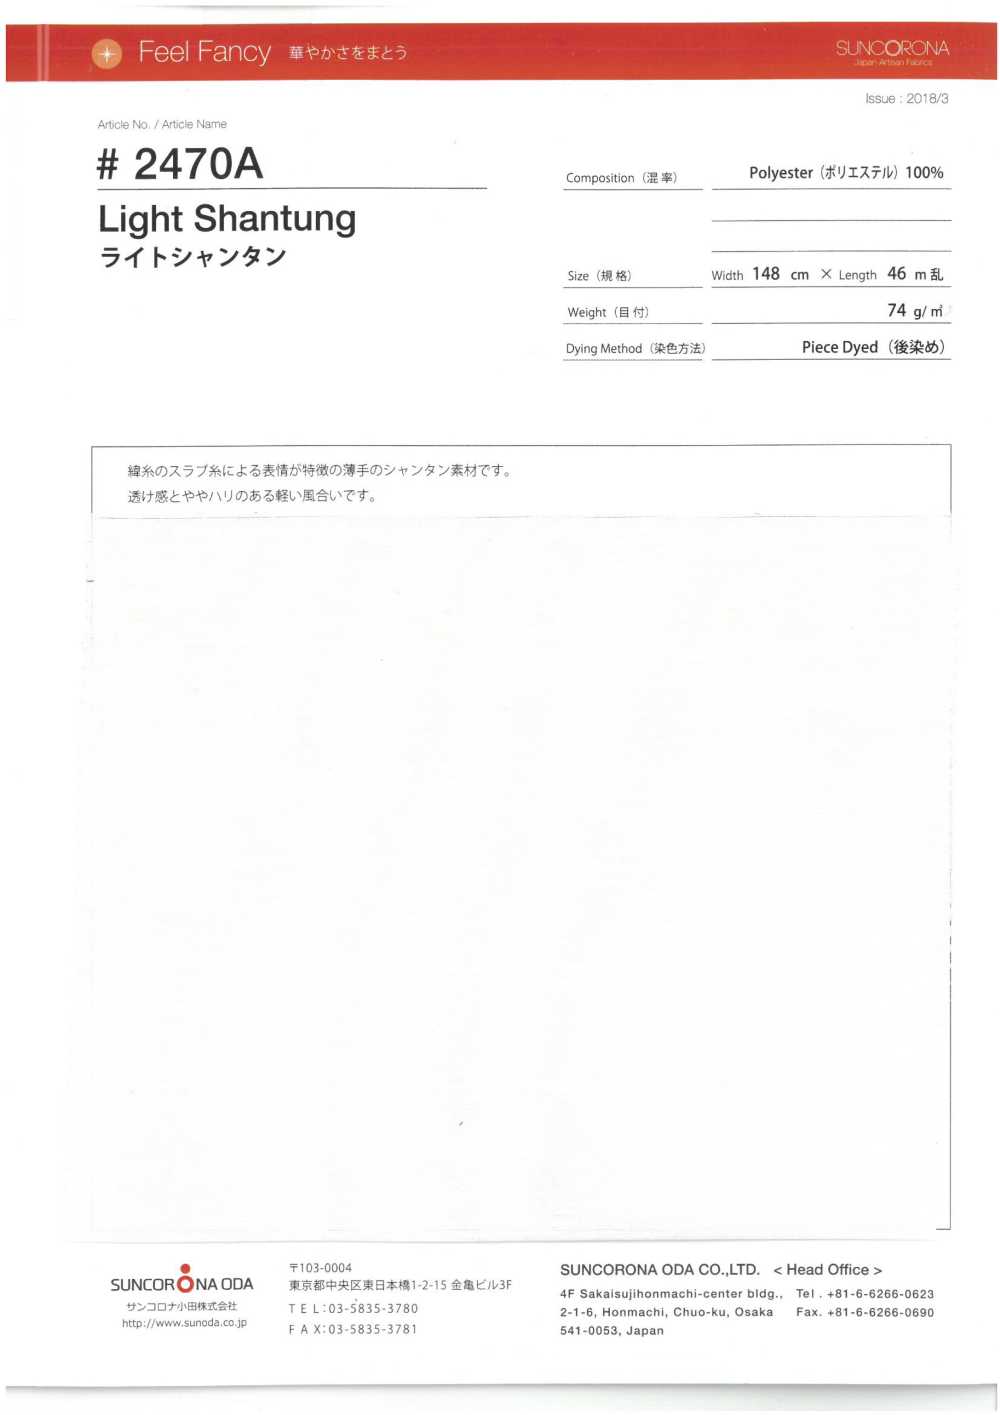 2470A Light Shantung[Fabrica Textil] Suncorona Oda